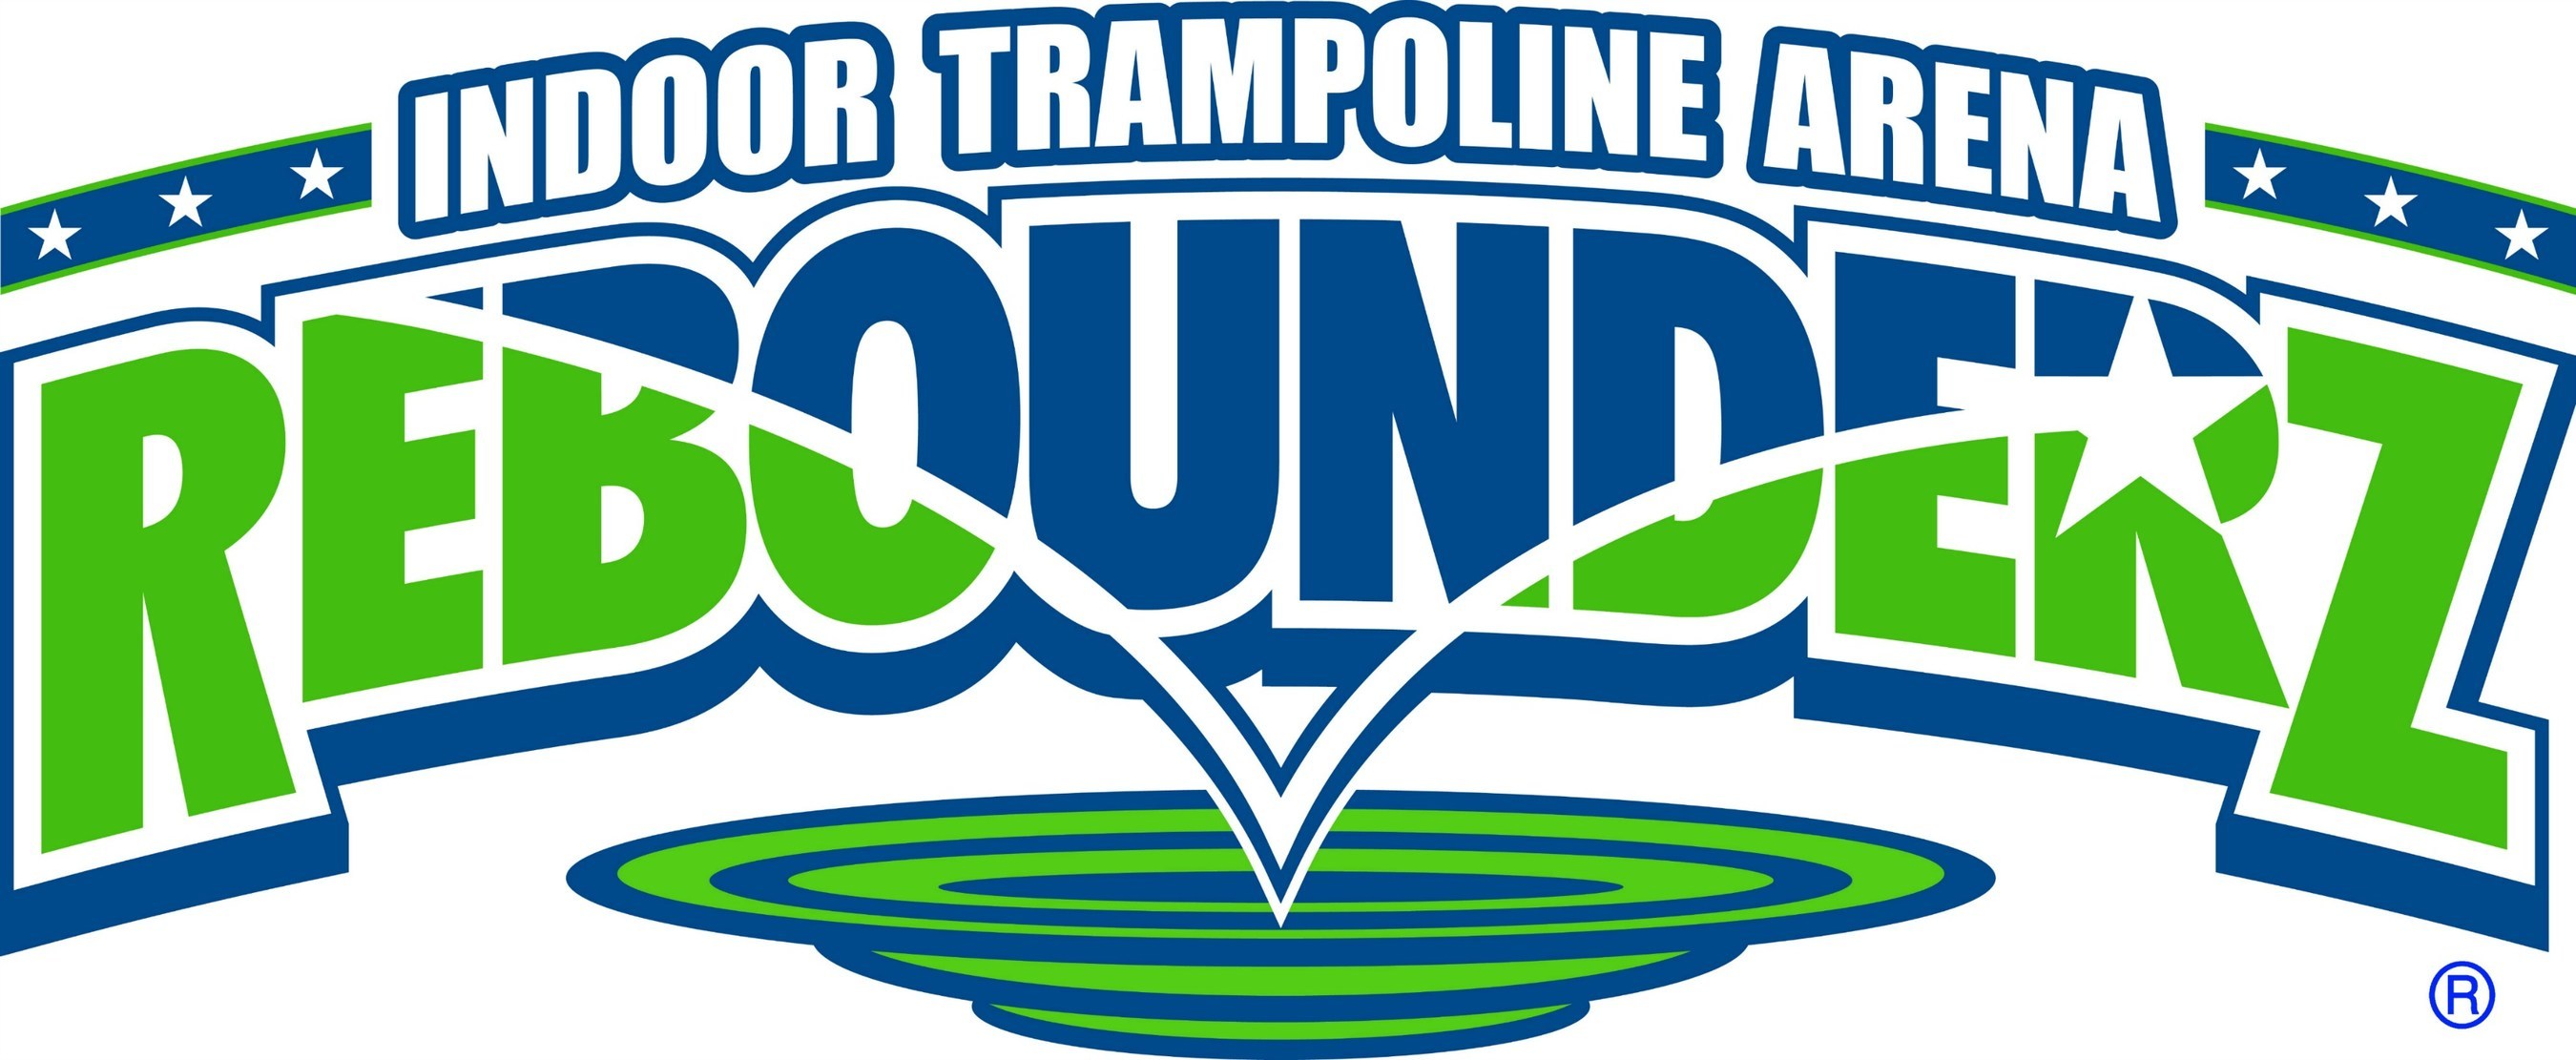 Rebounderz Indoor Trampoline Arena Jumps into the South Florida Market